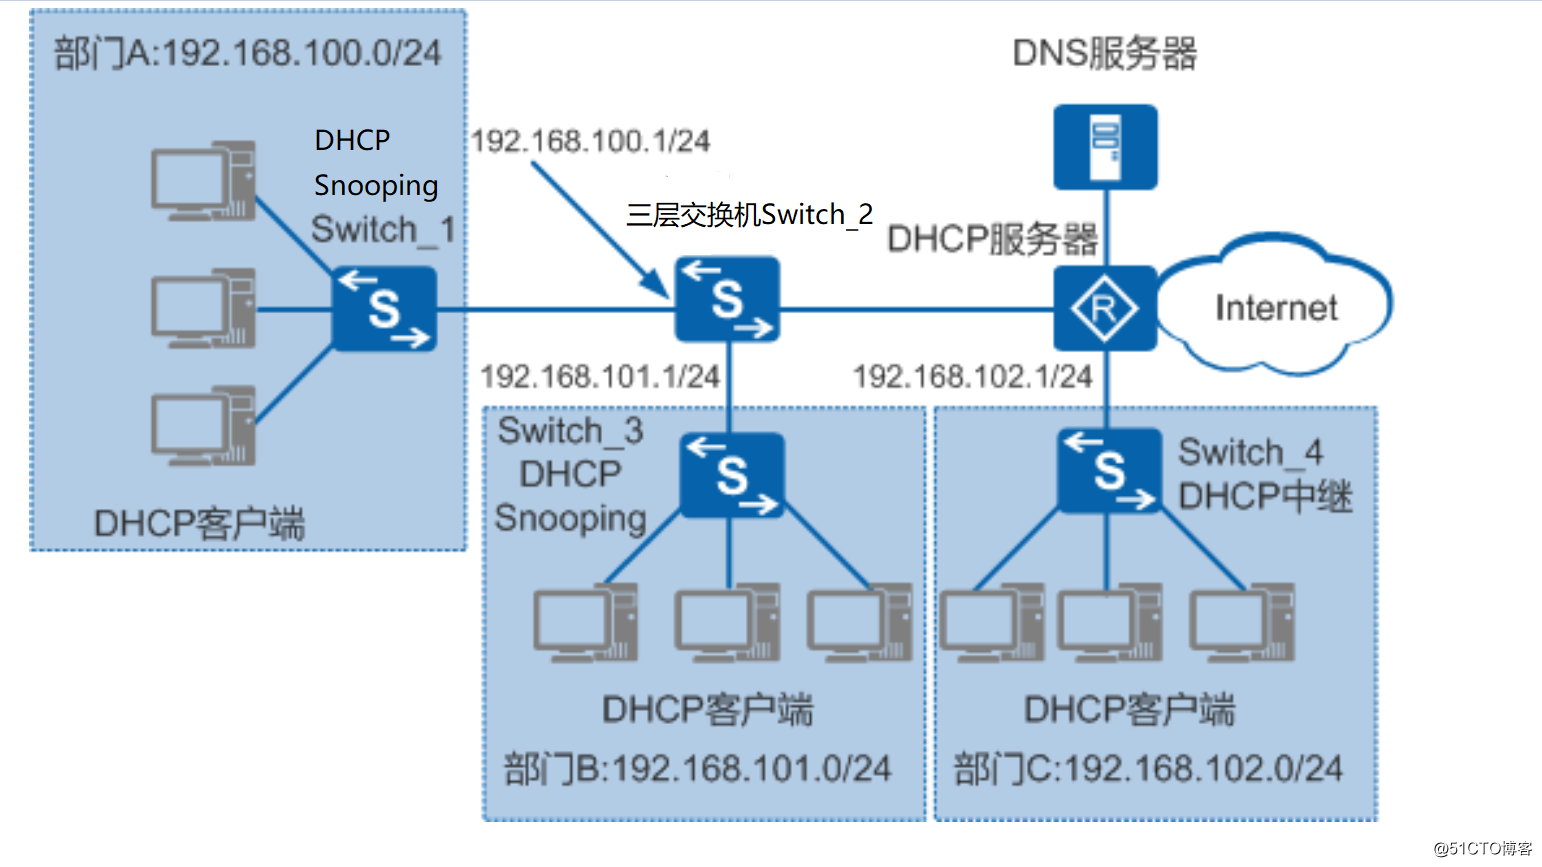 DHCP、DHCP Snooping及DHCP relay工作原理入門及實踐